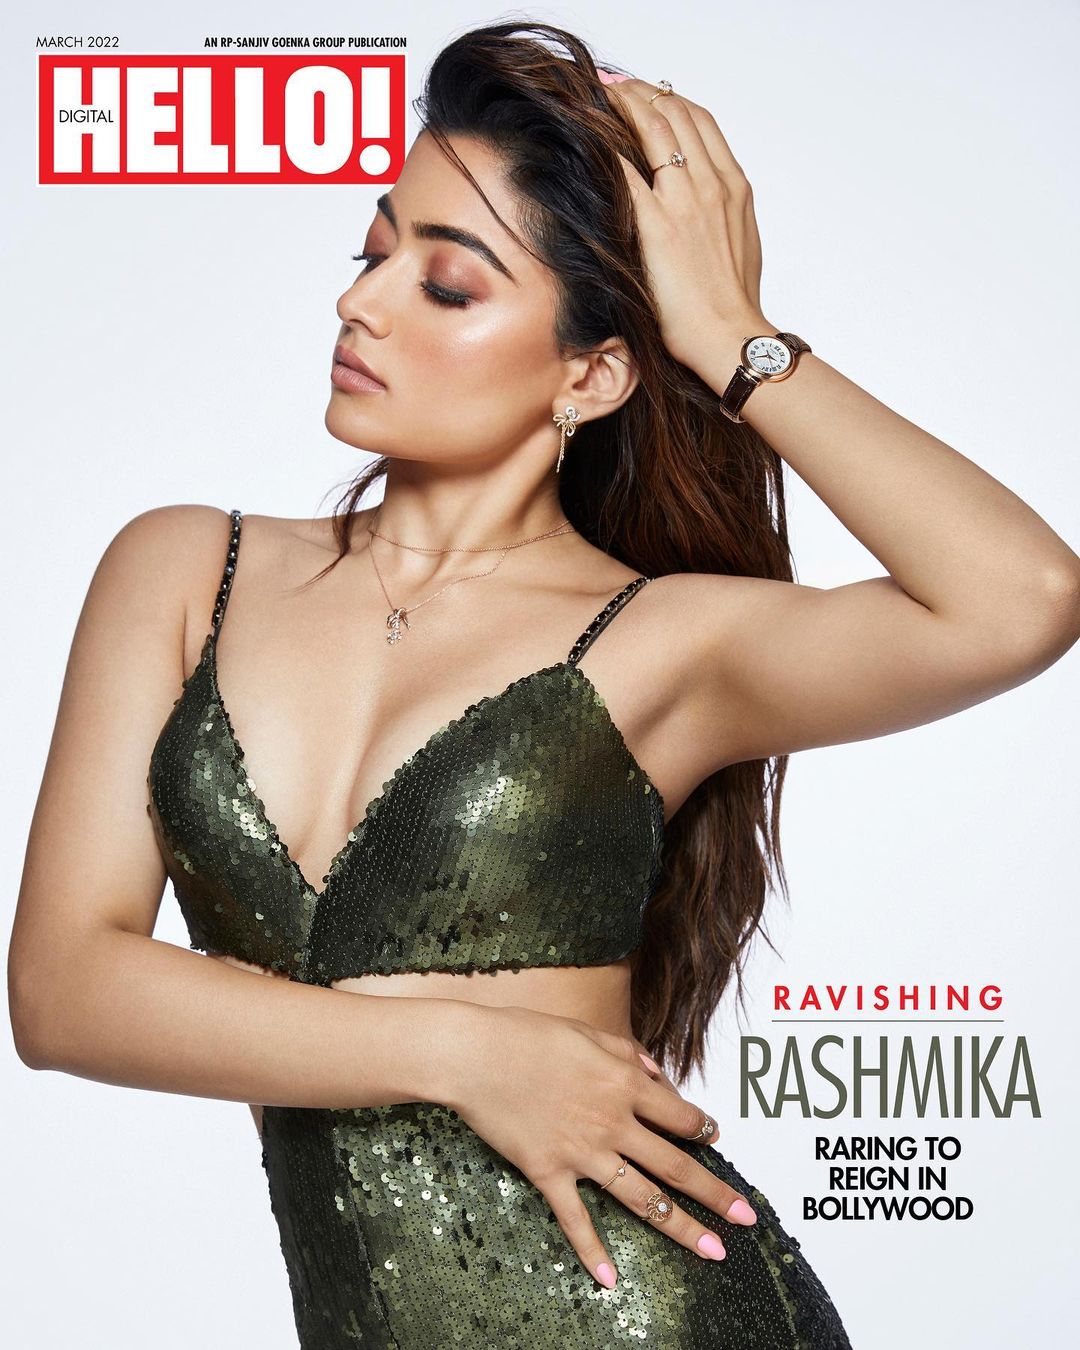 Rashmika Mandanna oozes oomph with her glamorous bold photoshoot